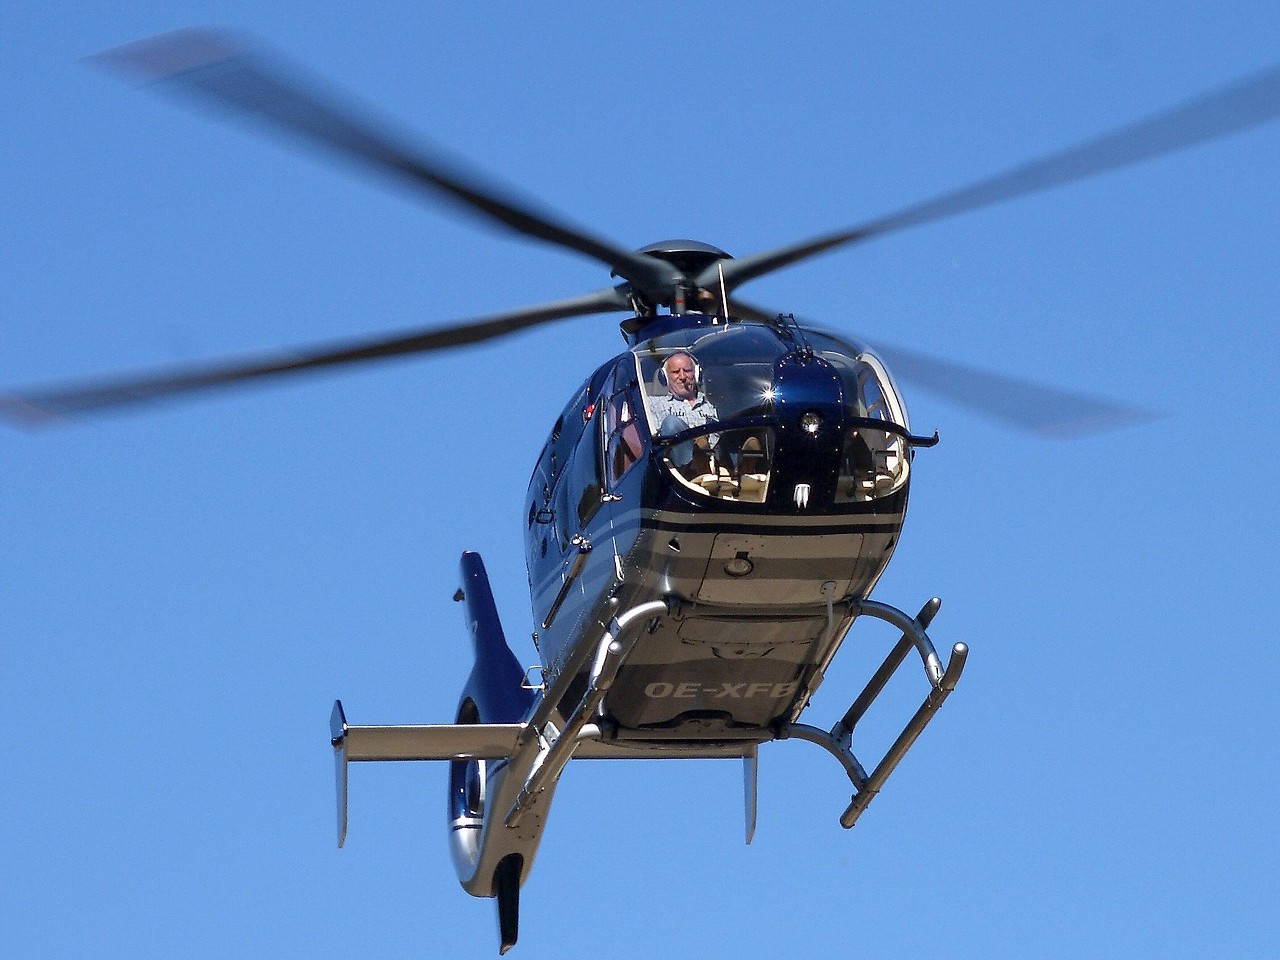 Mr. Mateschitz on a helicopter.